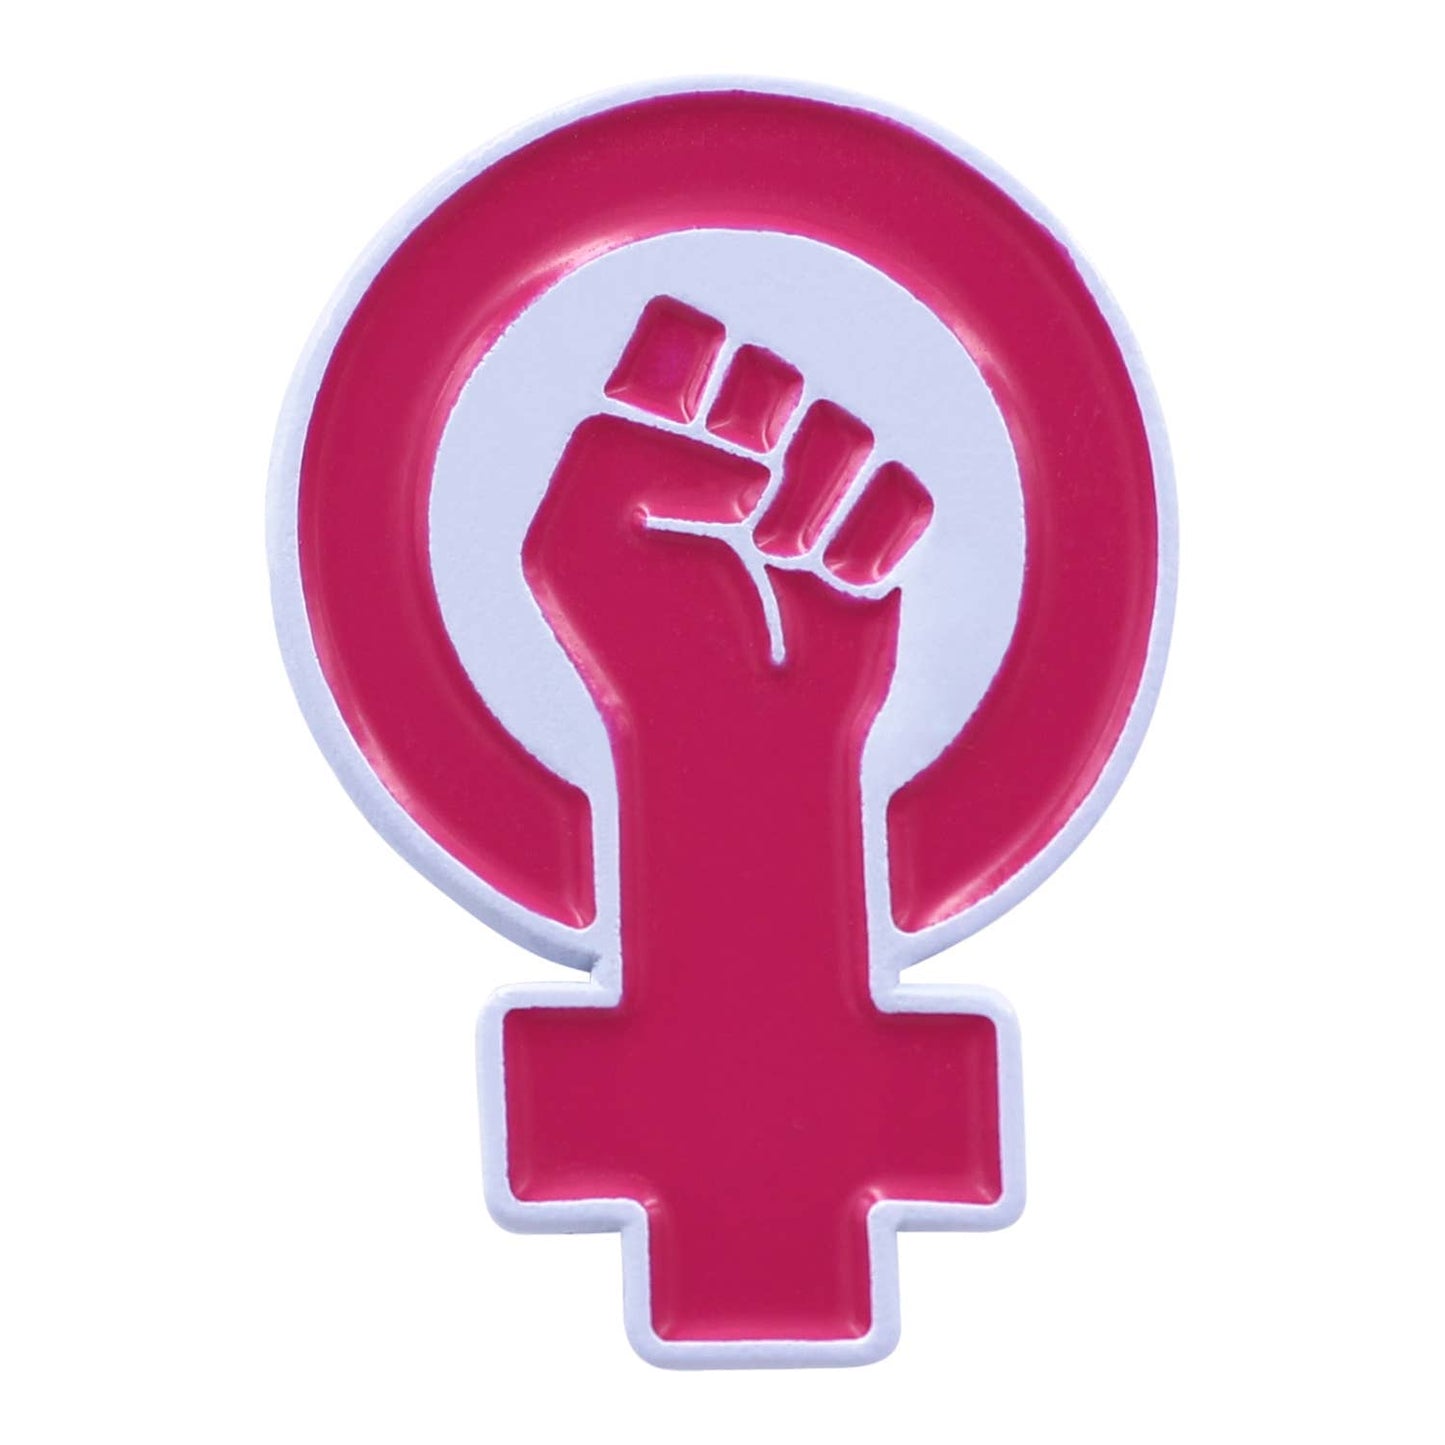 Image of Real Sic White Women's Power - Raised Feminist Fist Protest Enamel Pin